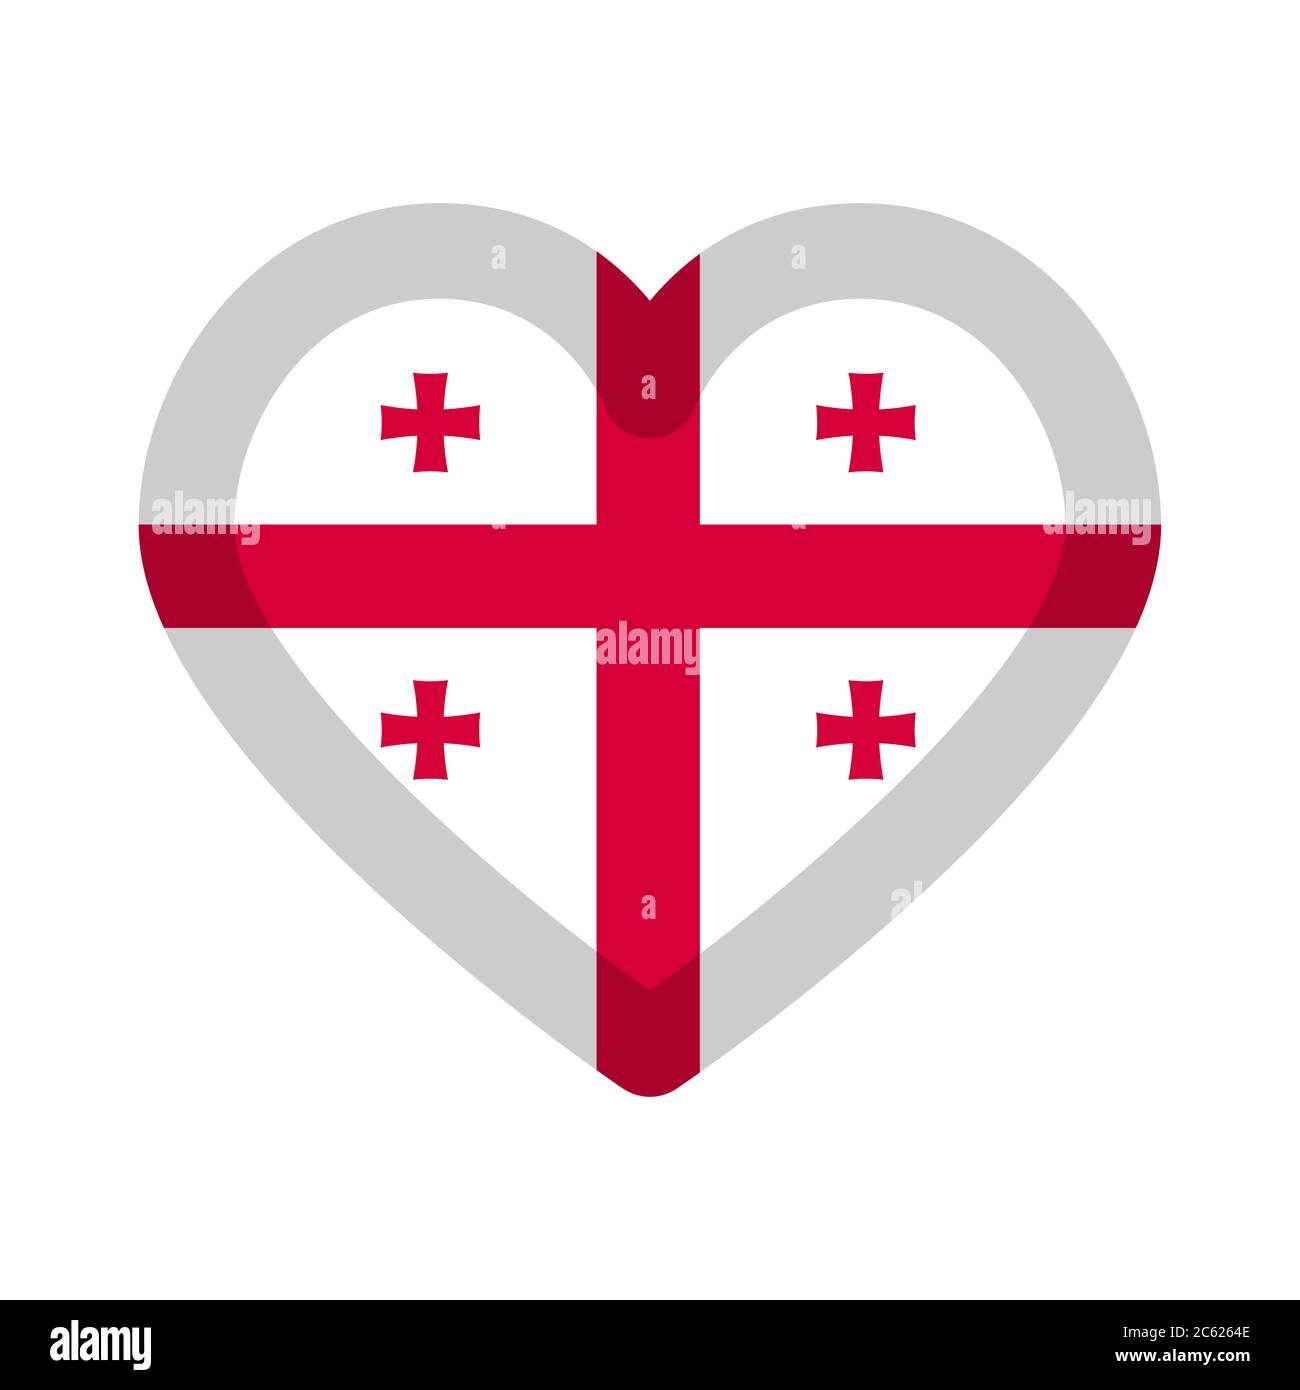 Georgia flag heart graphic element Illustration template design Stock Vector